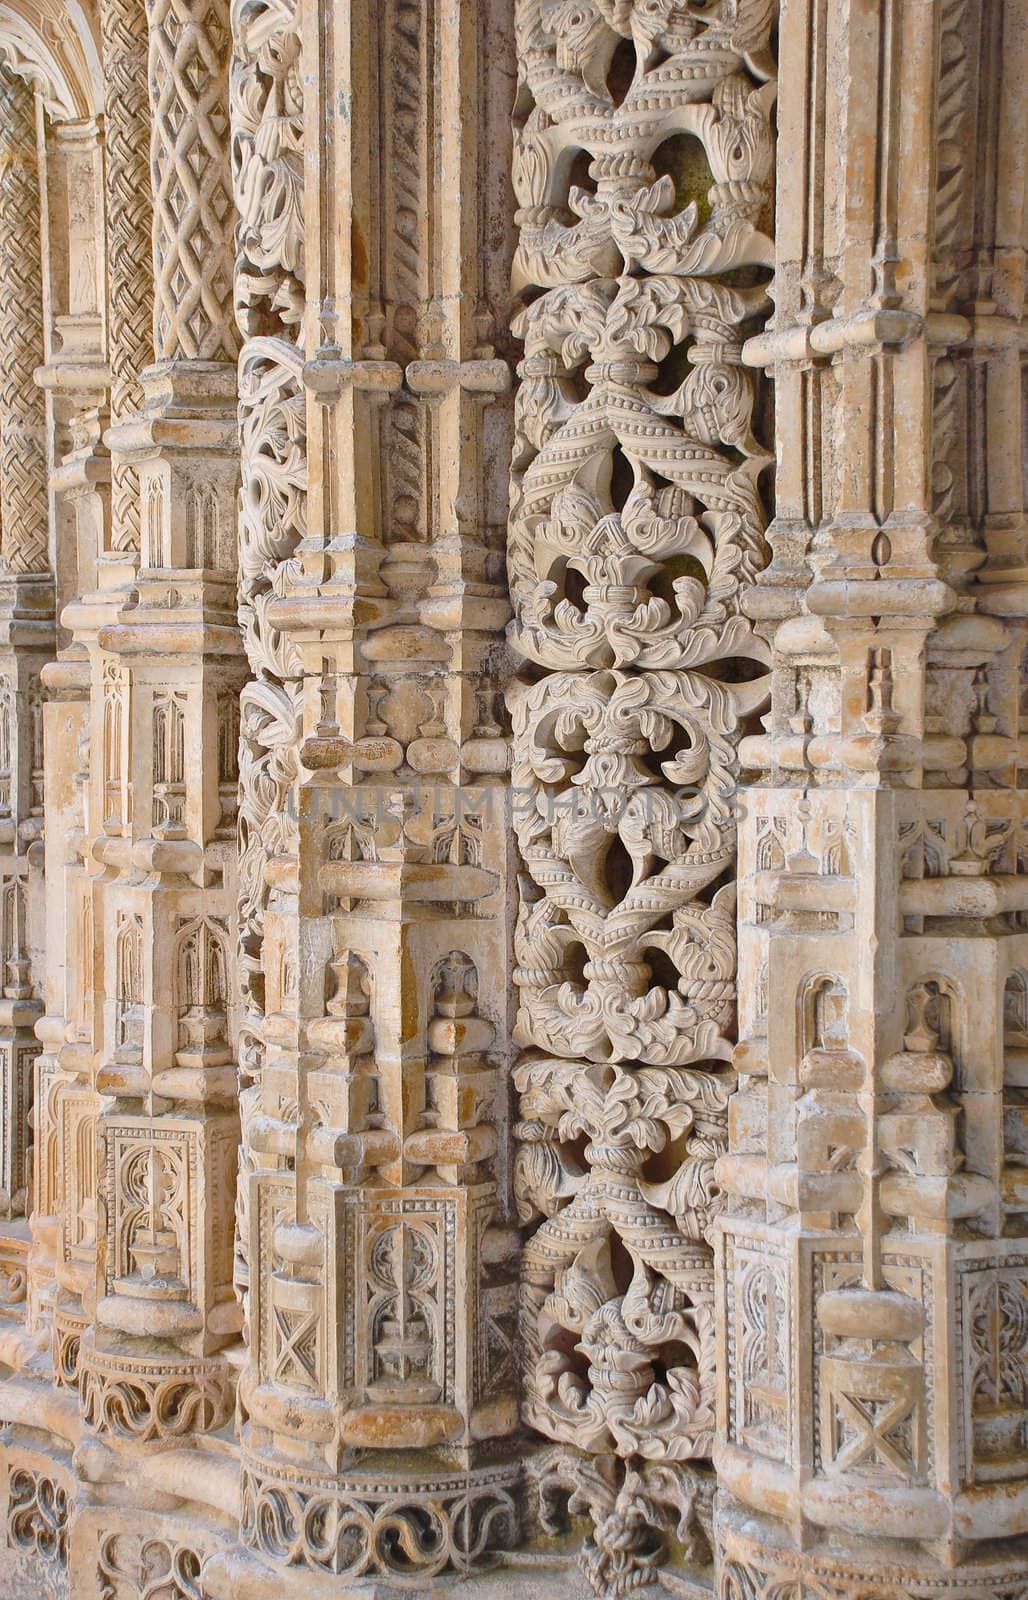 Details of stone portal in manuelino-style, Monasrtery of Batalha, Portugal.